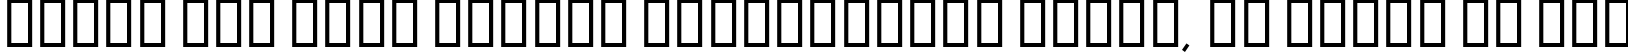 Пример написания шрифтом Andover текста на русском